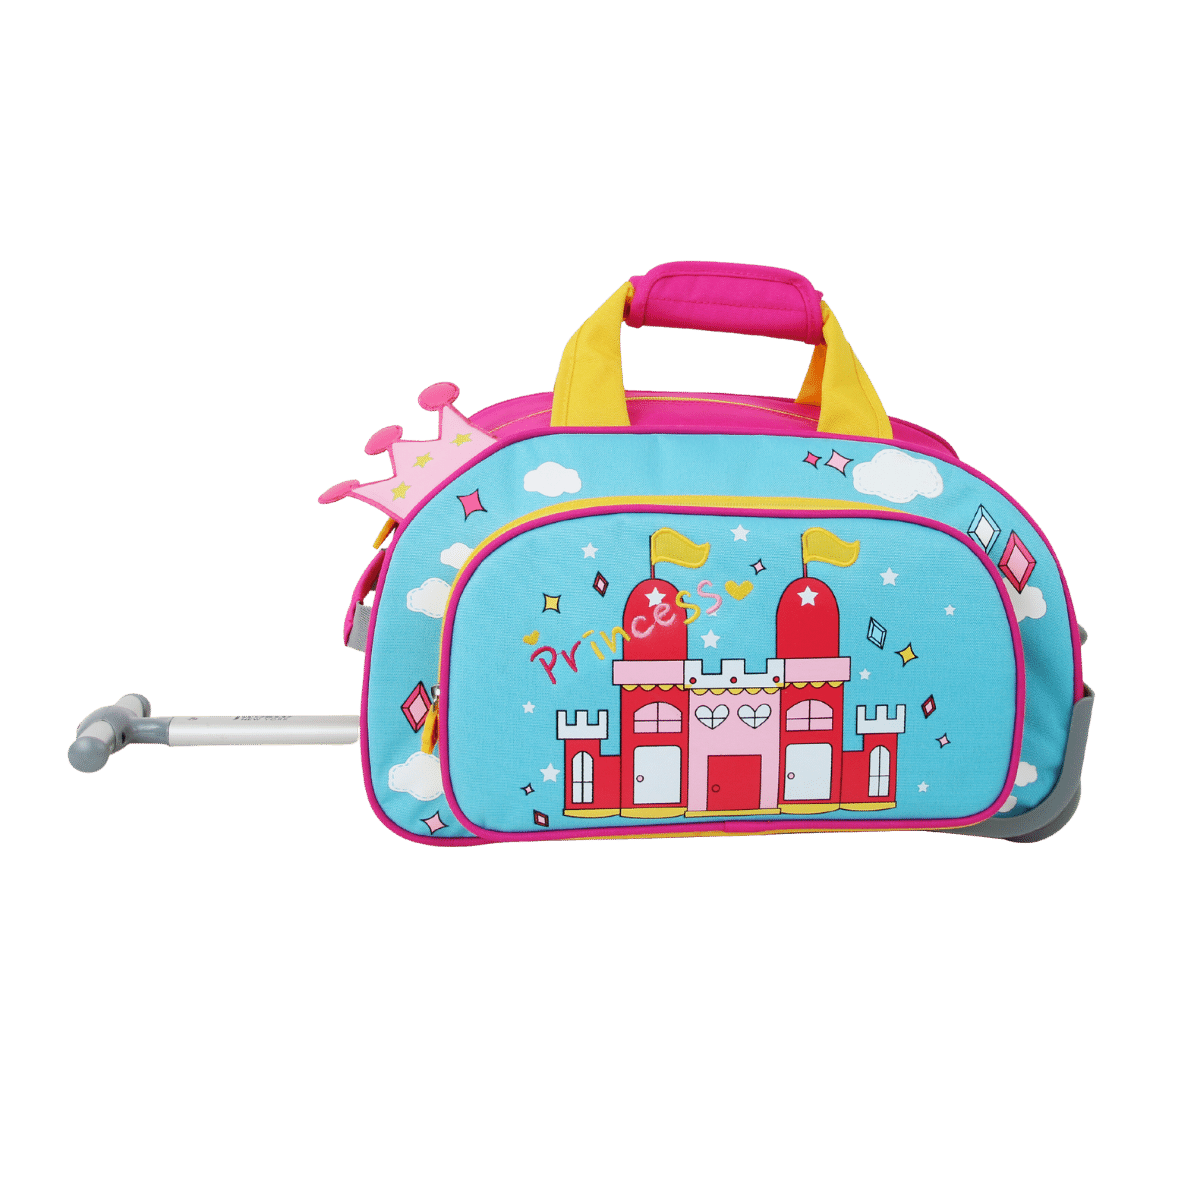 Kids Travel Duffle Bag With Wheels - JWorldstore